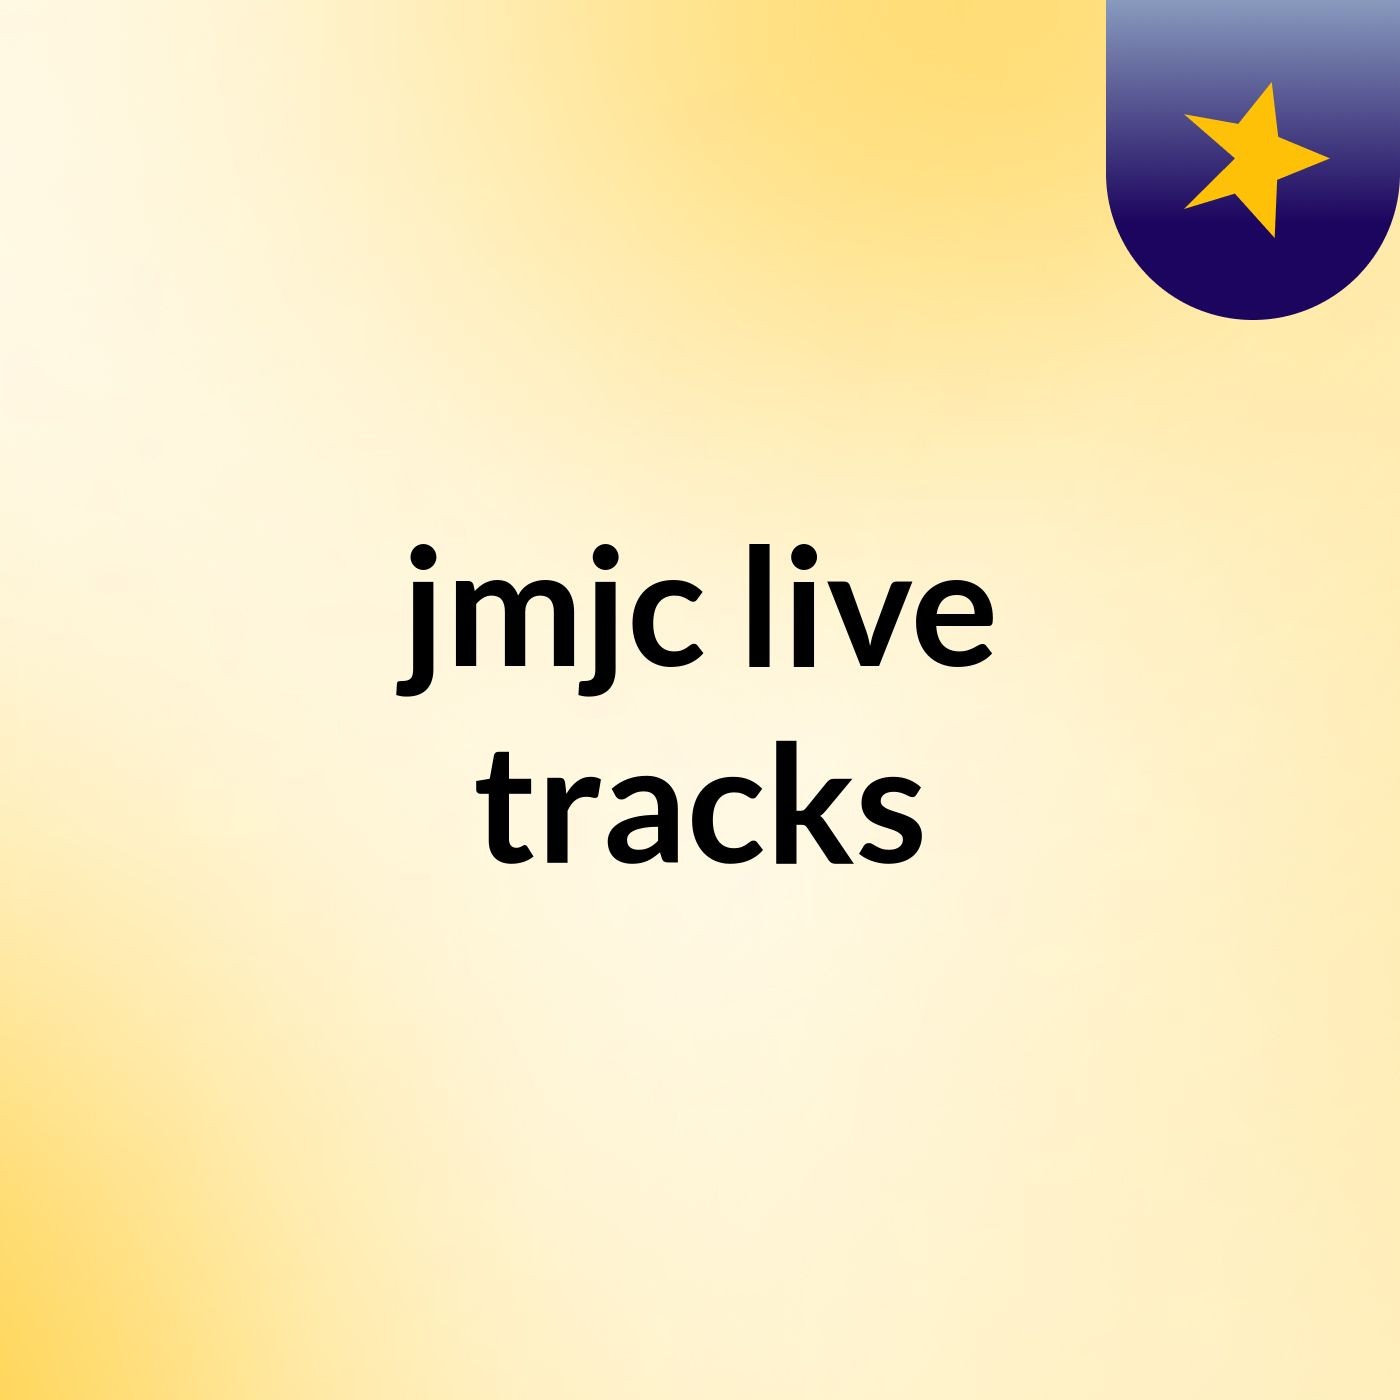 jmjc live tracks